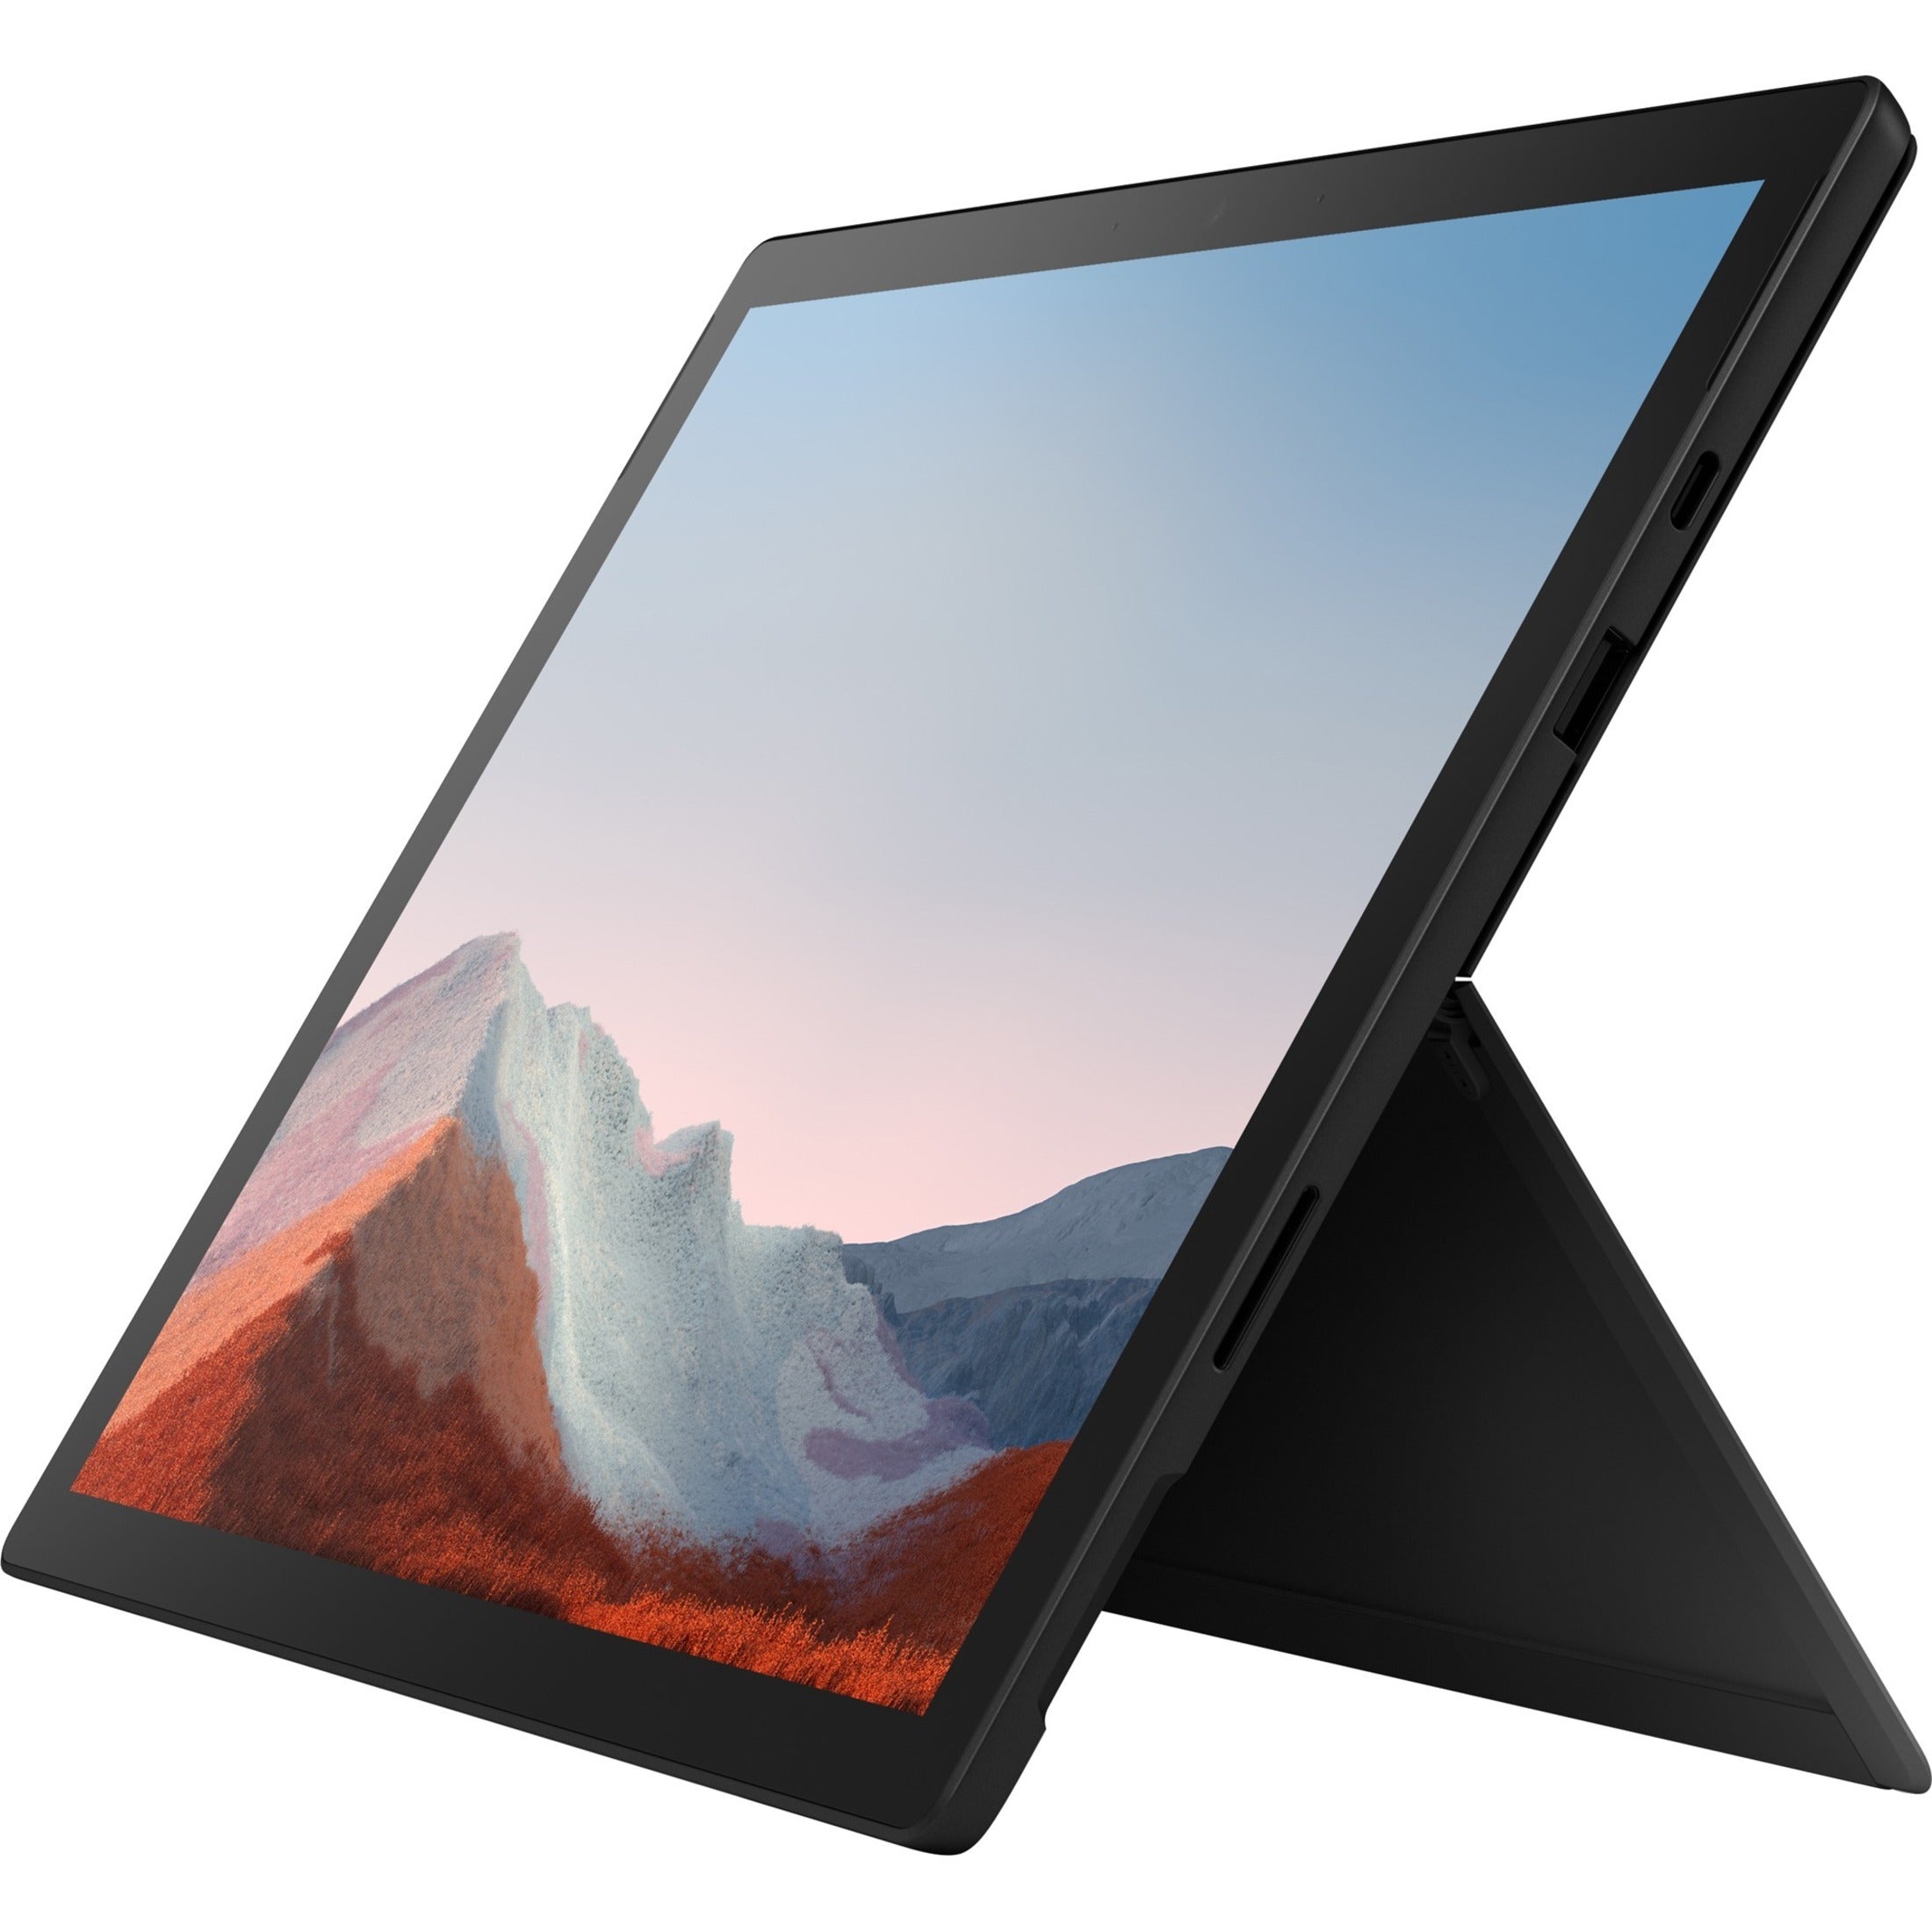 Microsoft 1YC-00002 Surface Pro 7+ Tablet, 12.3, Core i7, 16GB RAM, 256GB SSD, Windows 10 Pro